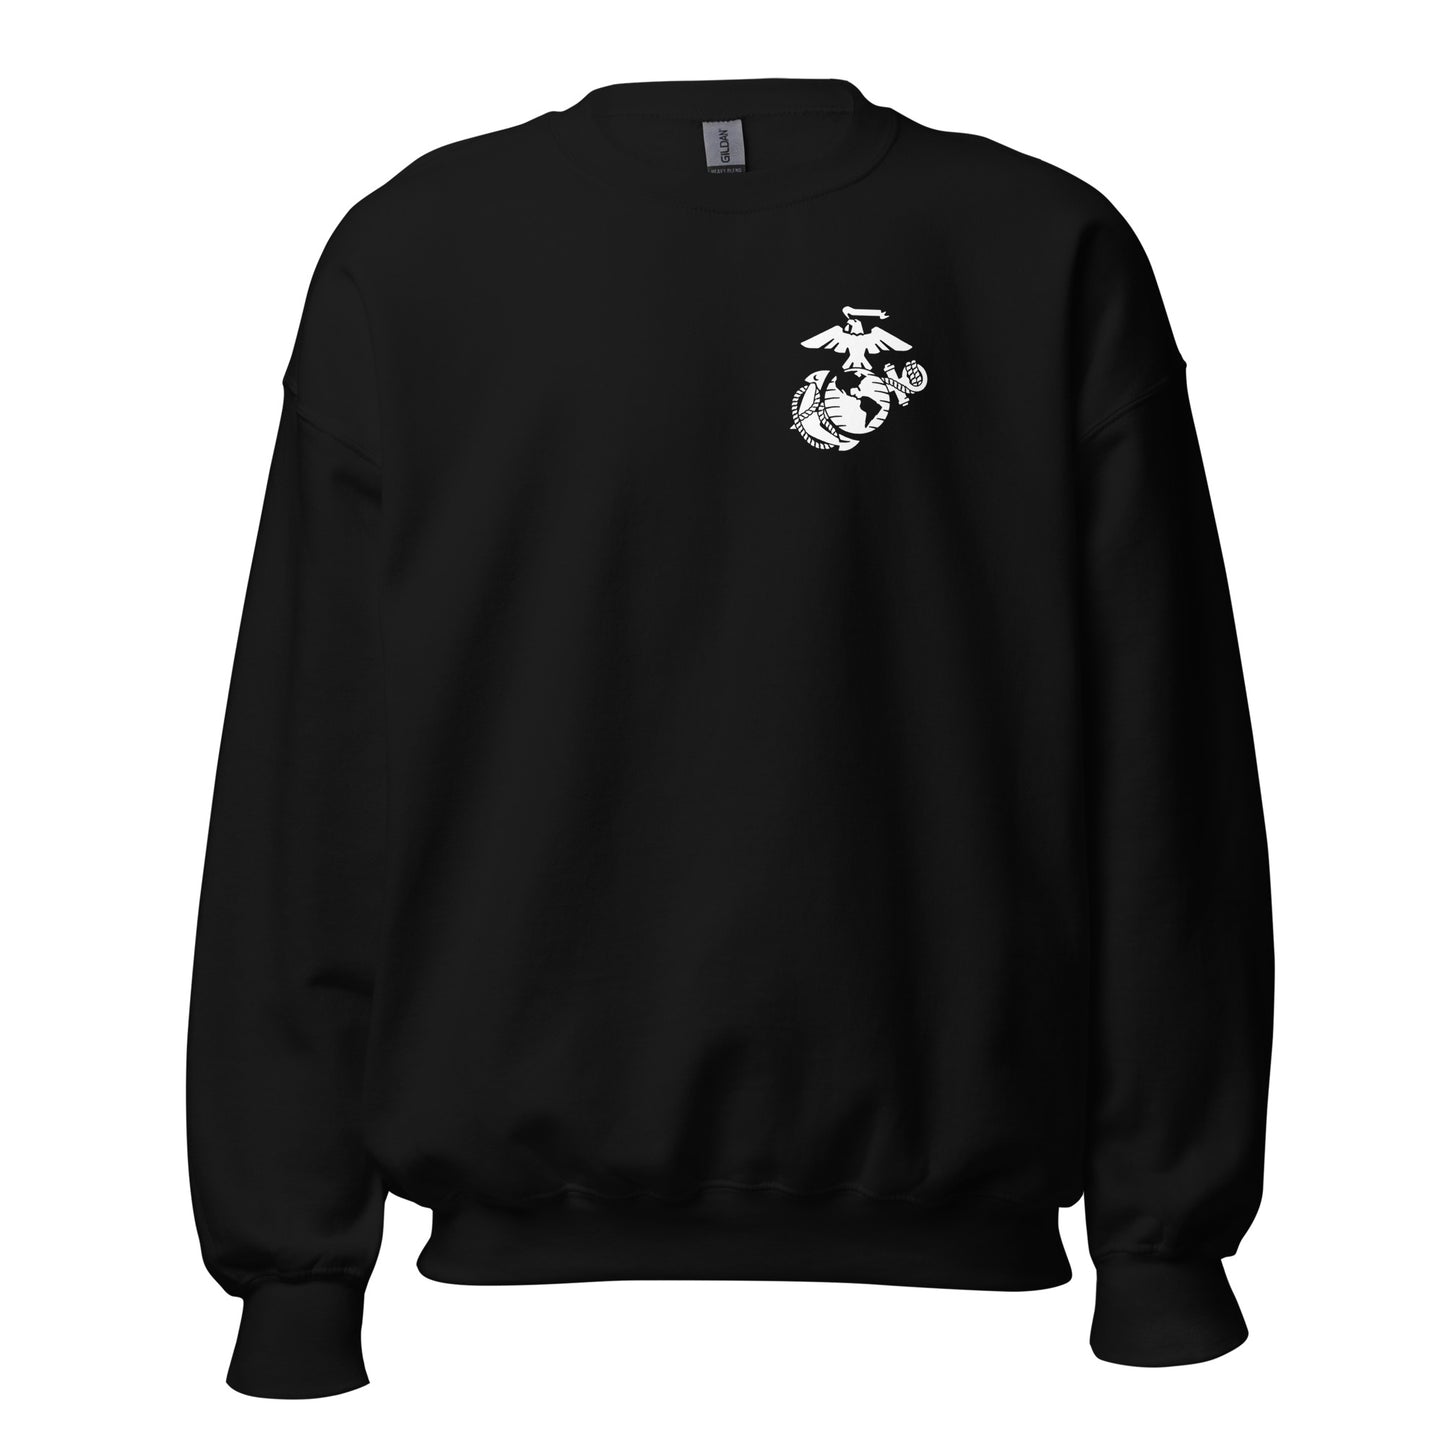 RS Sacramento Crew Neck Sweatshirt